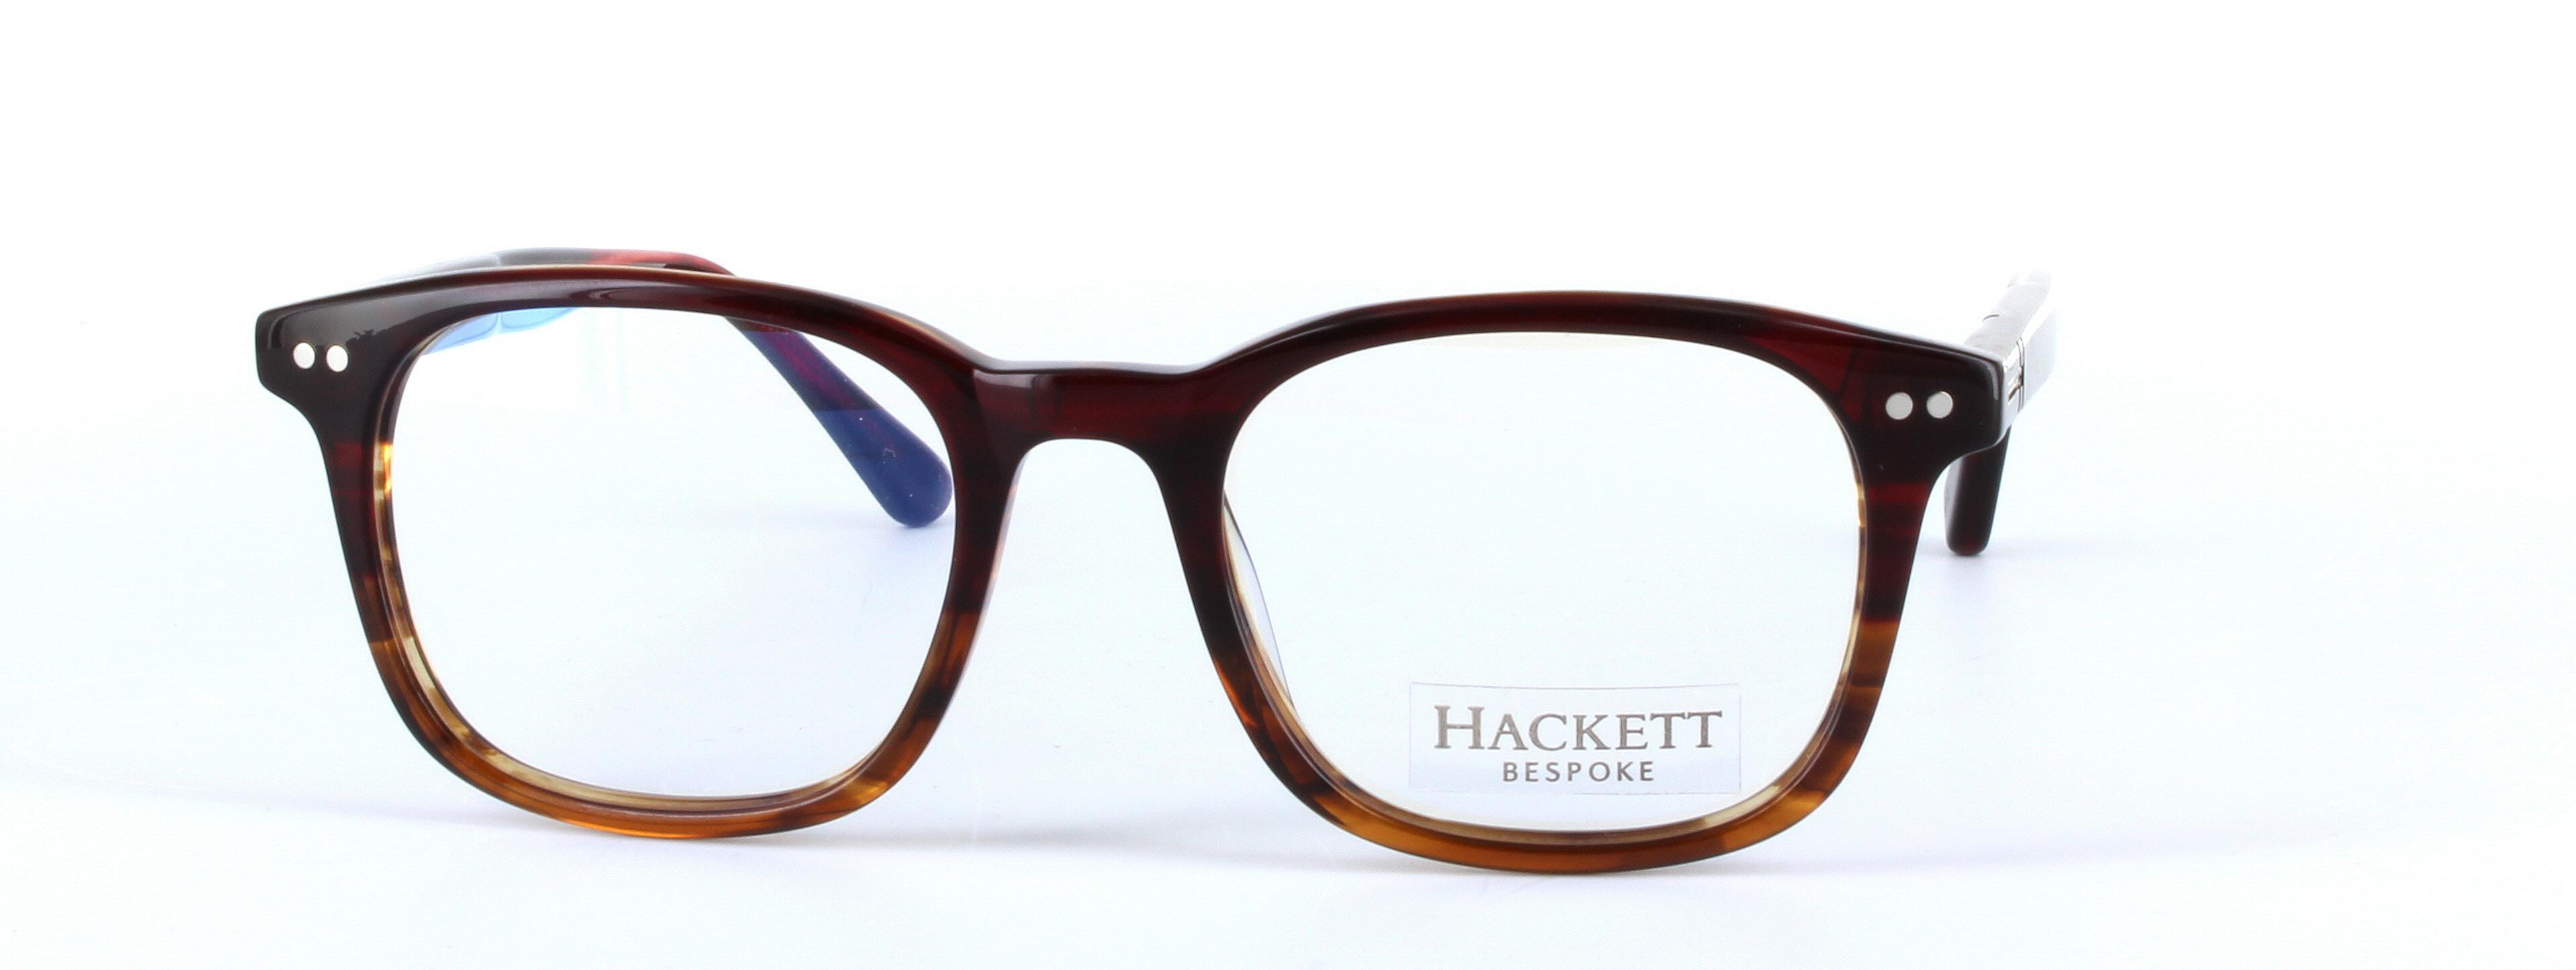 HACKETT BESPOKE (HEB111-103) Brown Full Rim Oval Round Acetate Glasses - Image View 5